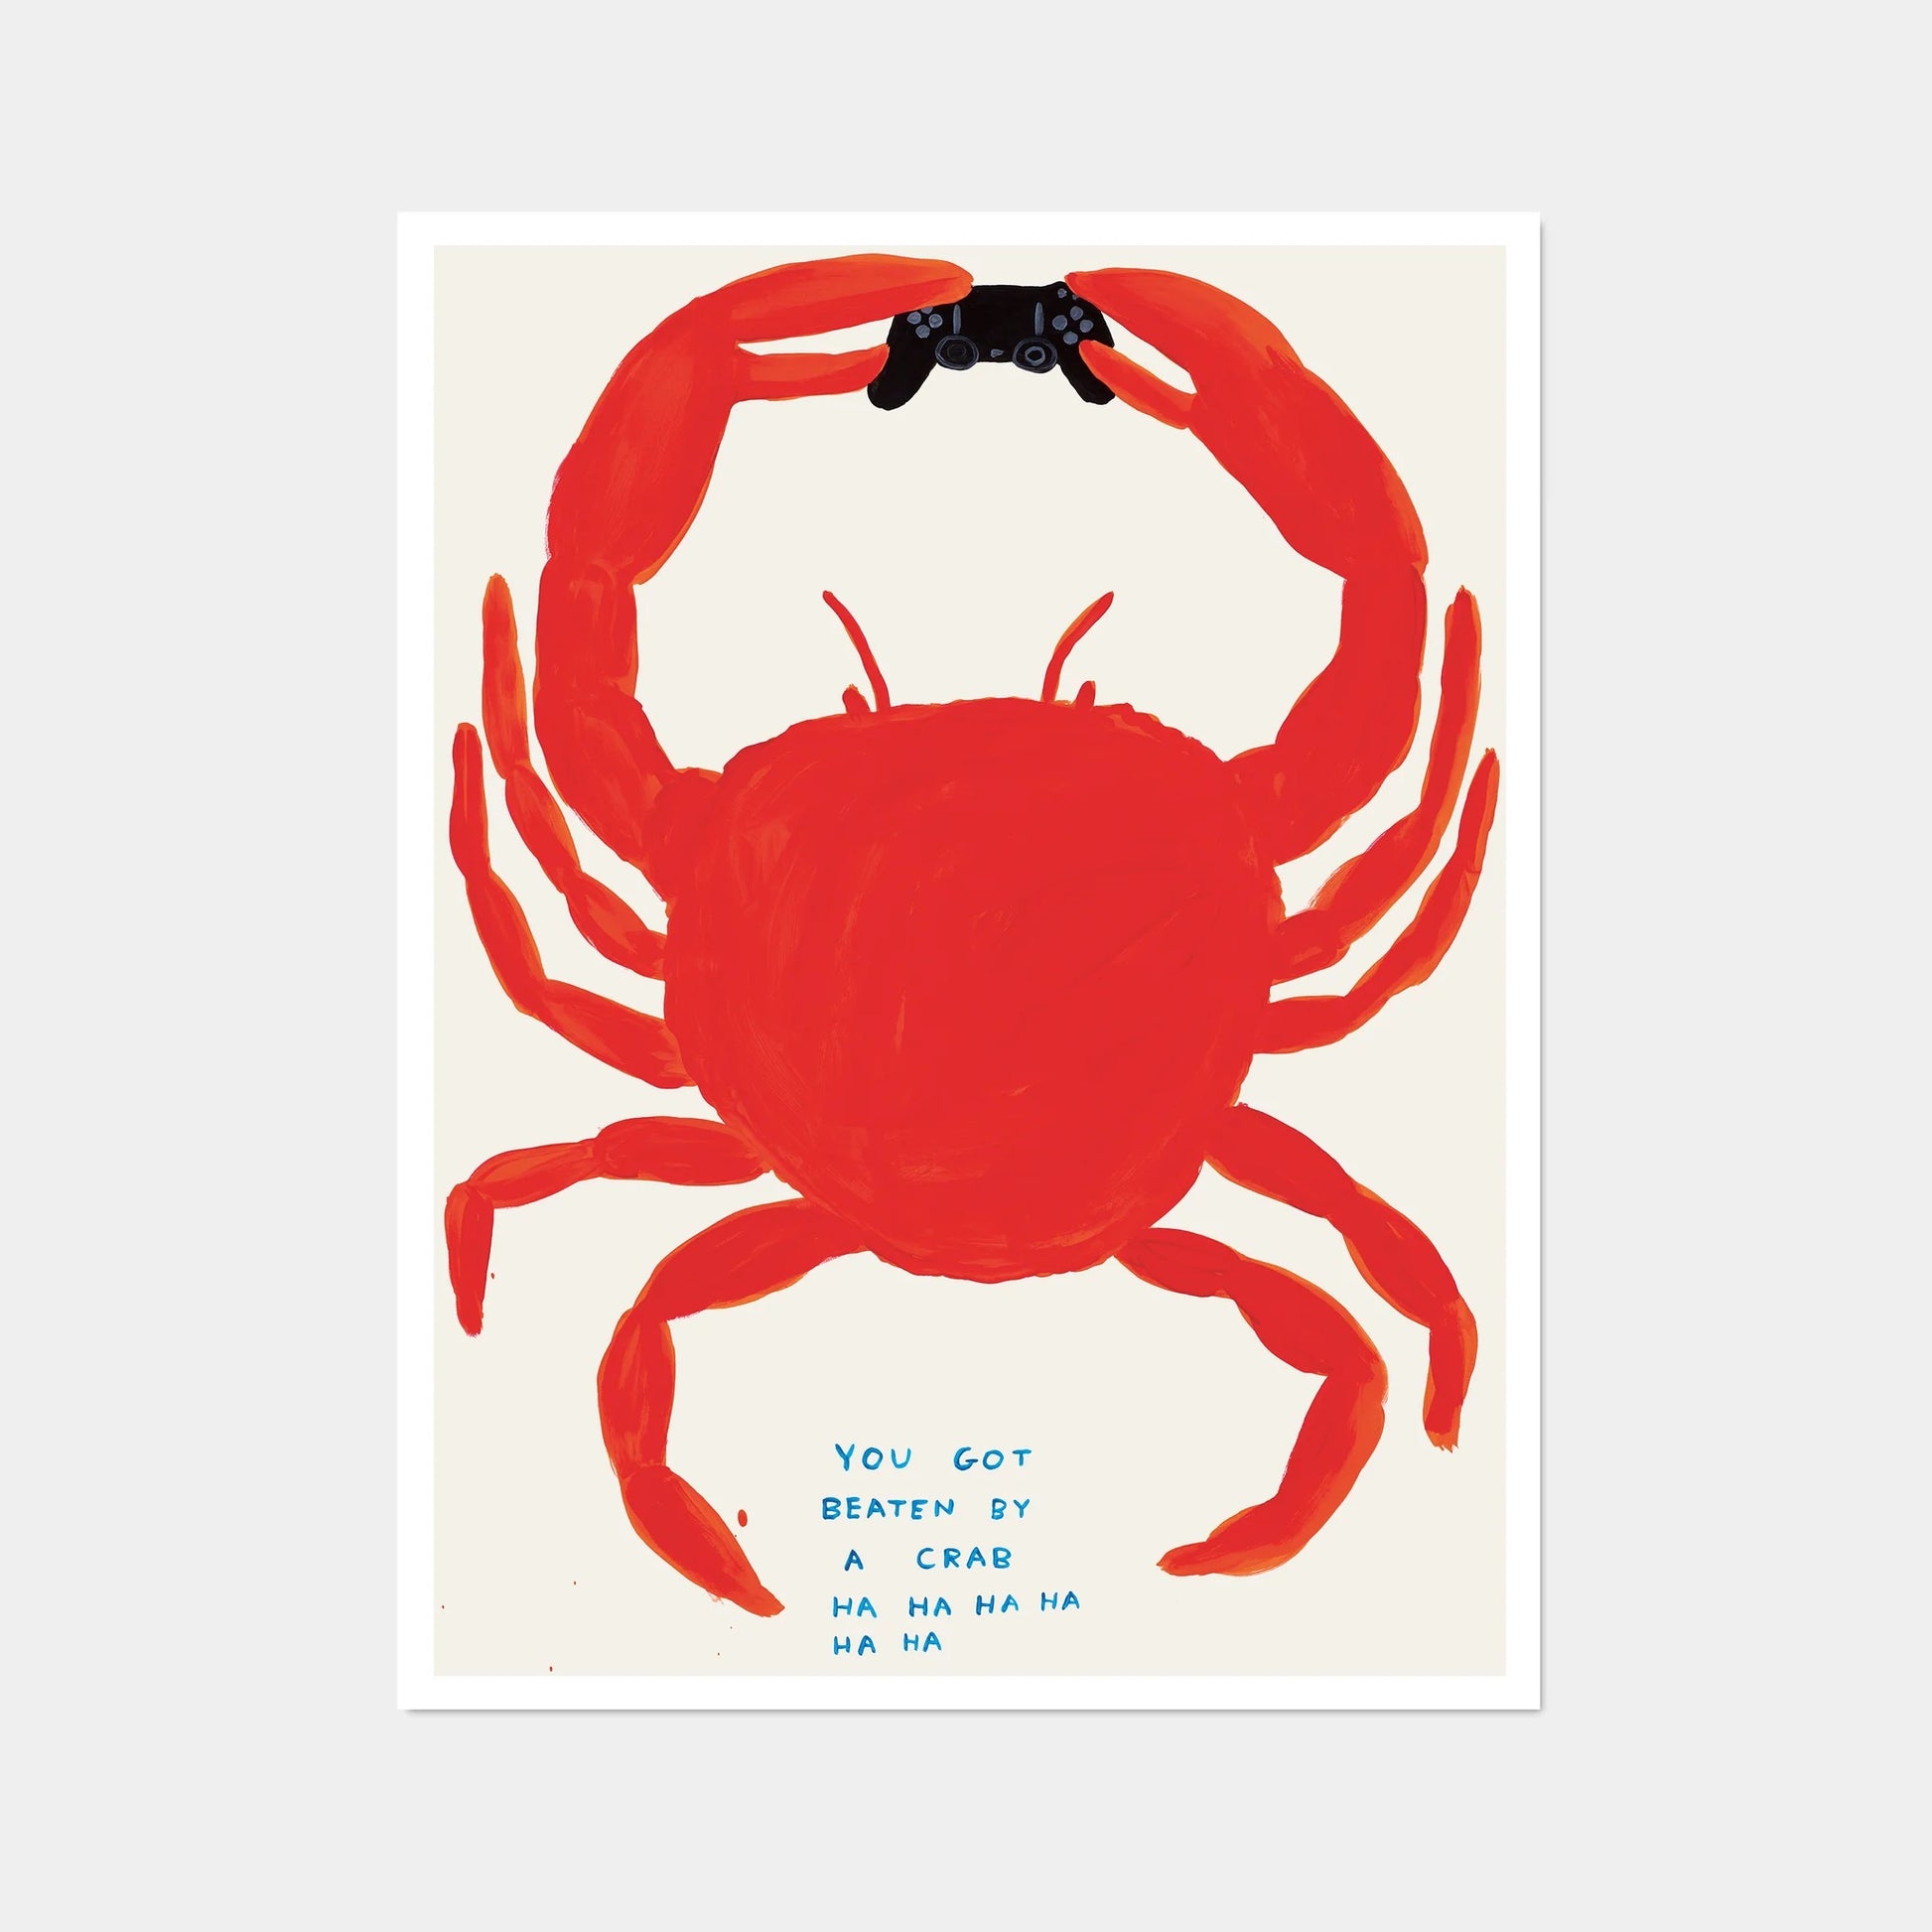 David Shrigley - You Got Beaten By A Crab - Printed on 200g Munken Lynx Paper - 60cm x 80cm